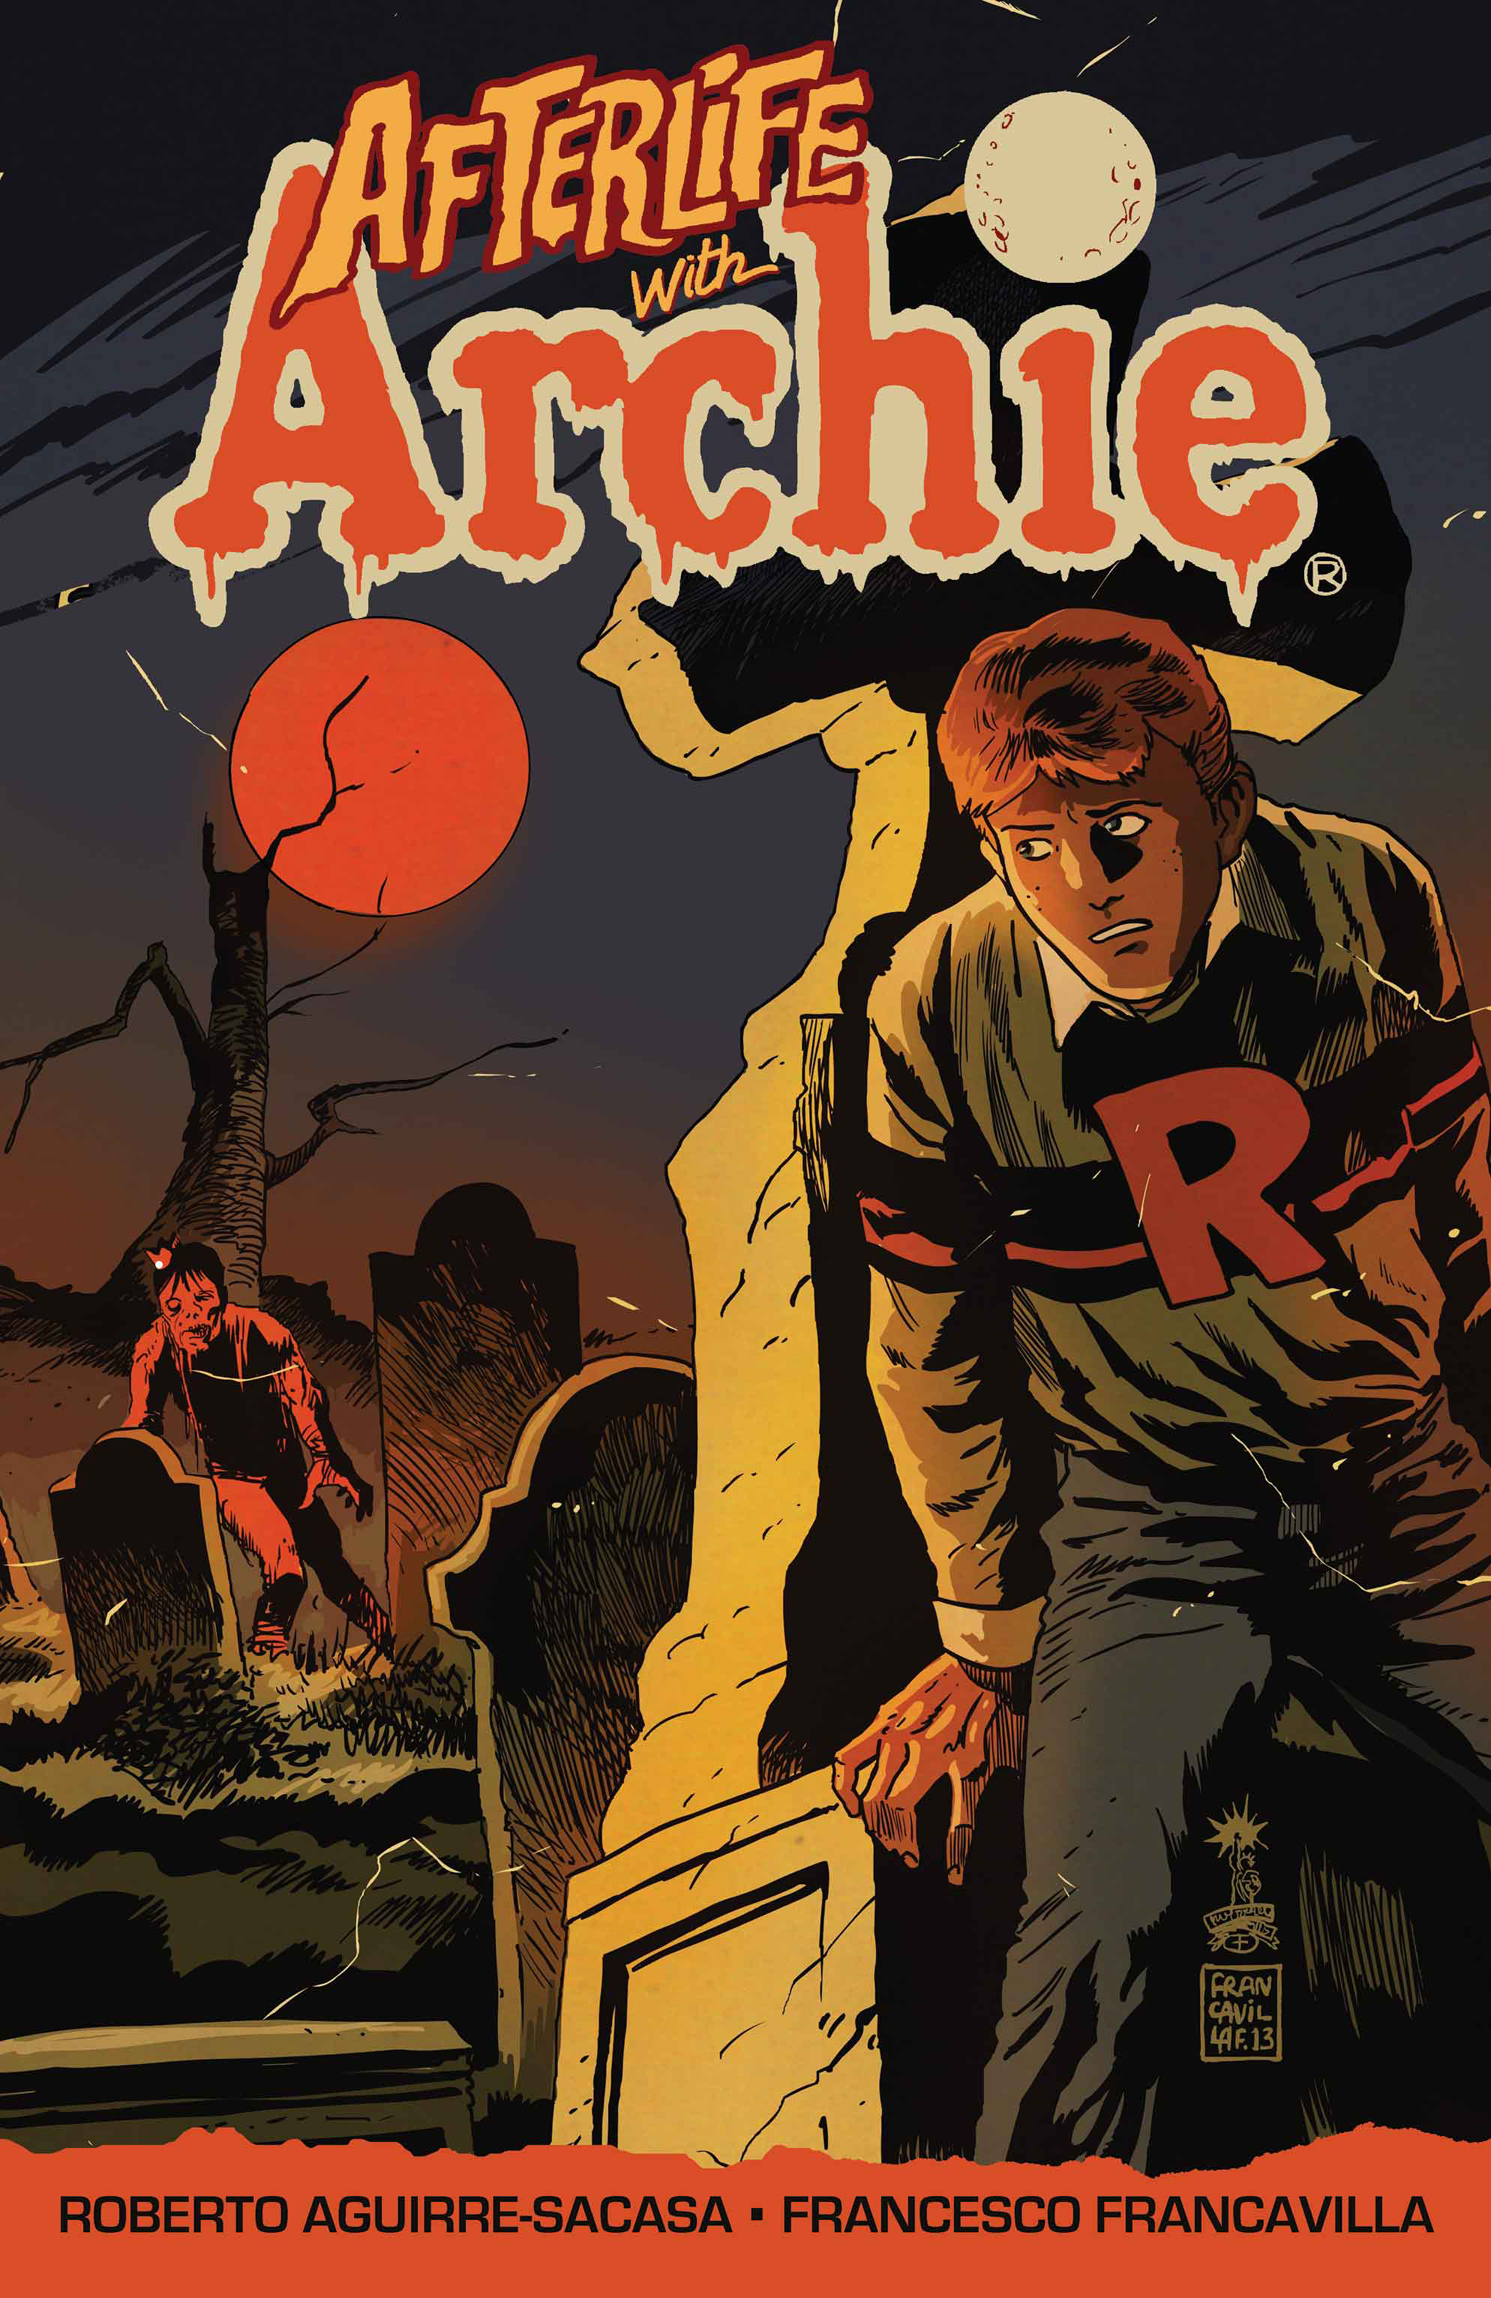 Afterlife archie comics